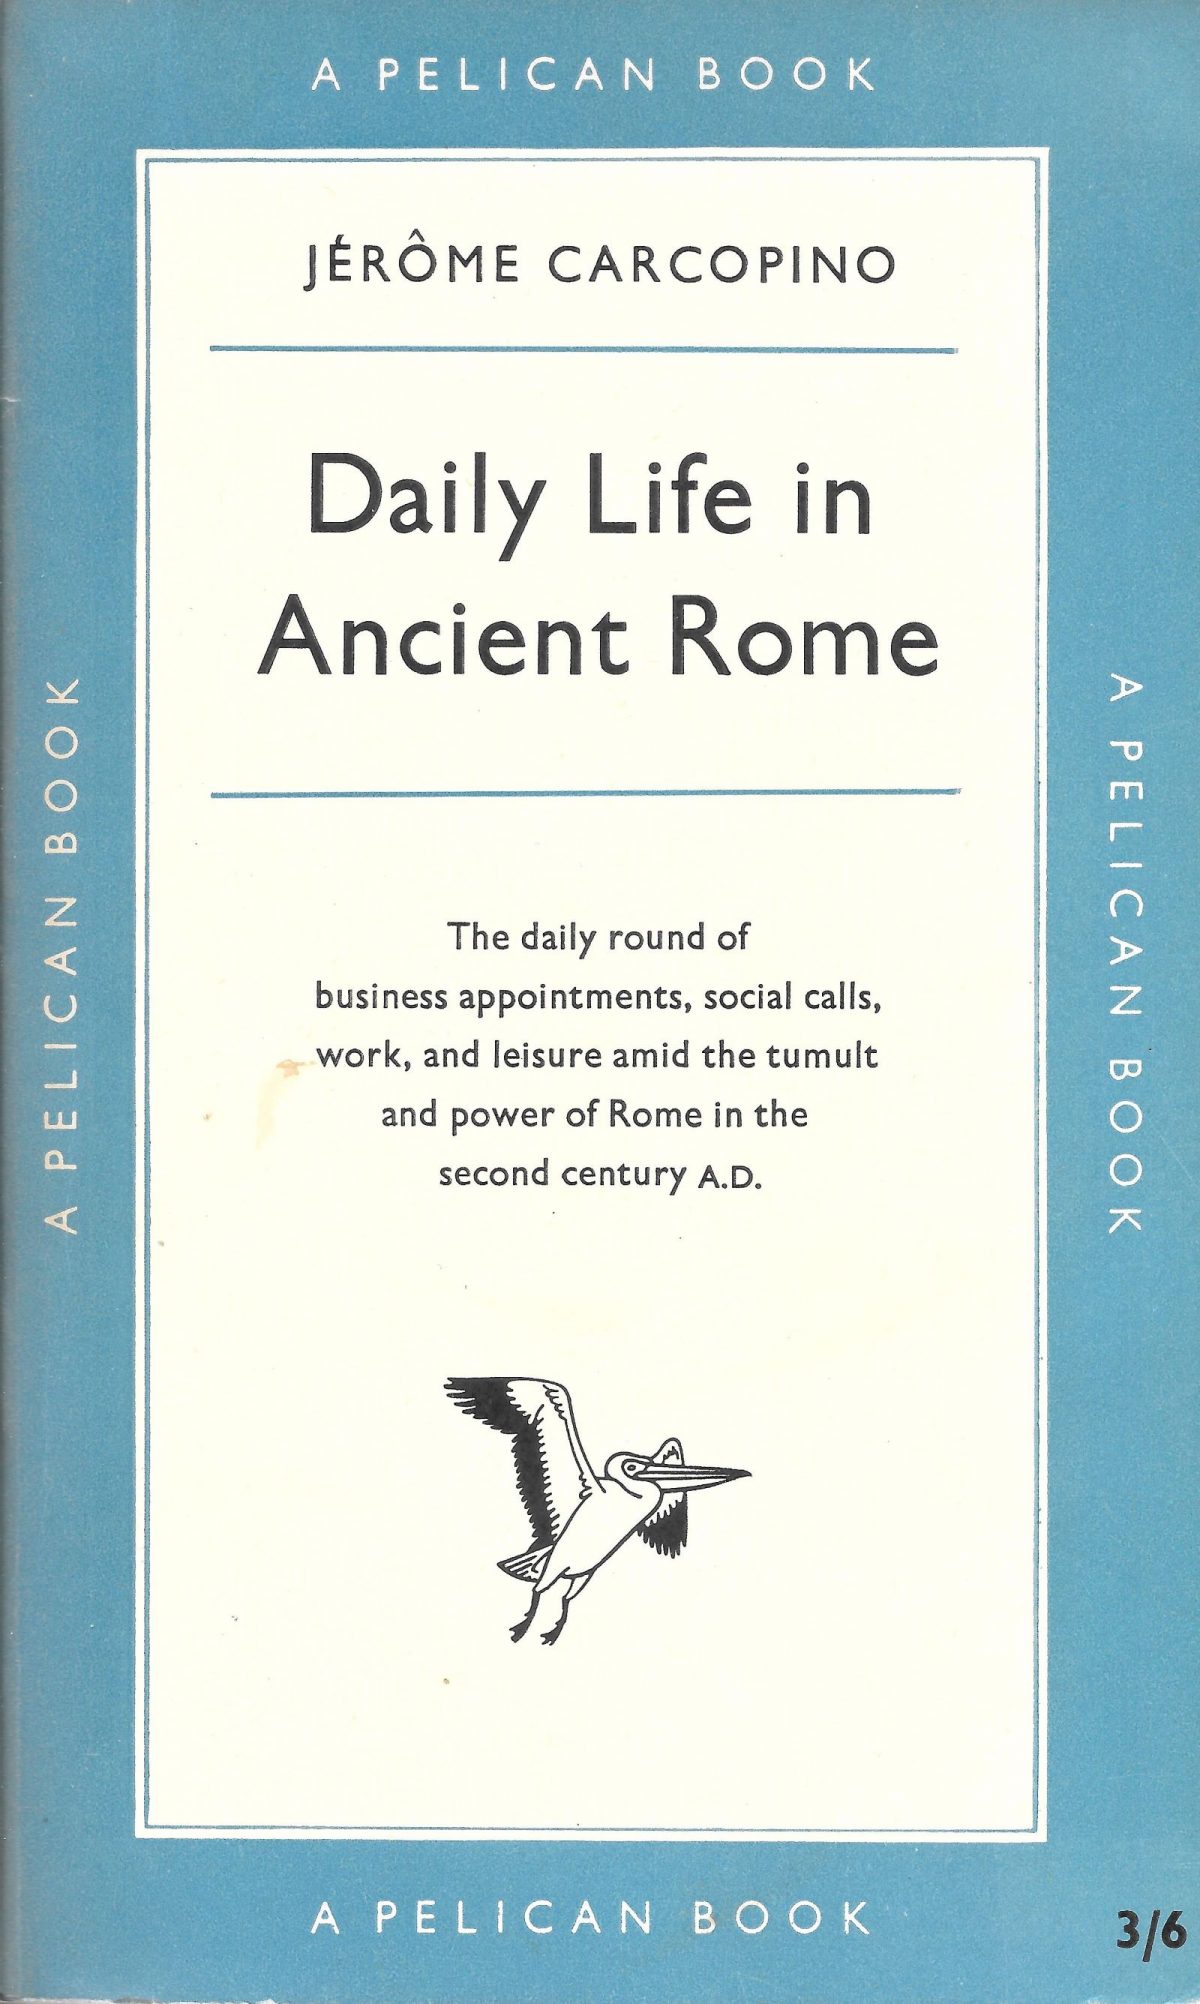 Pelican, Penguin Books, book covers, highbrow, literature, science, politics, art, architecture, design, books, Ancient Rome